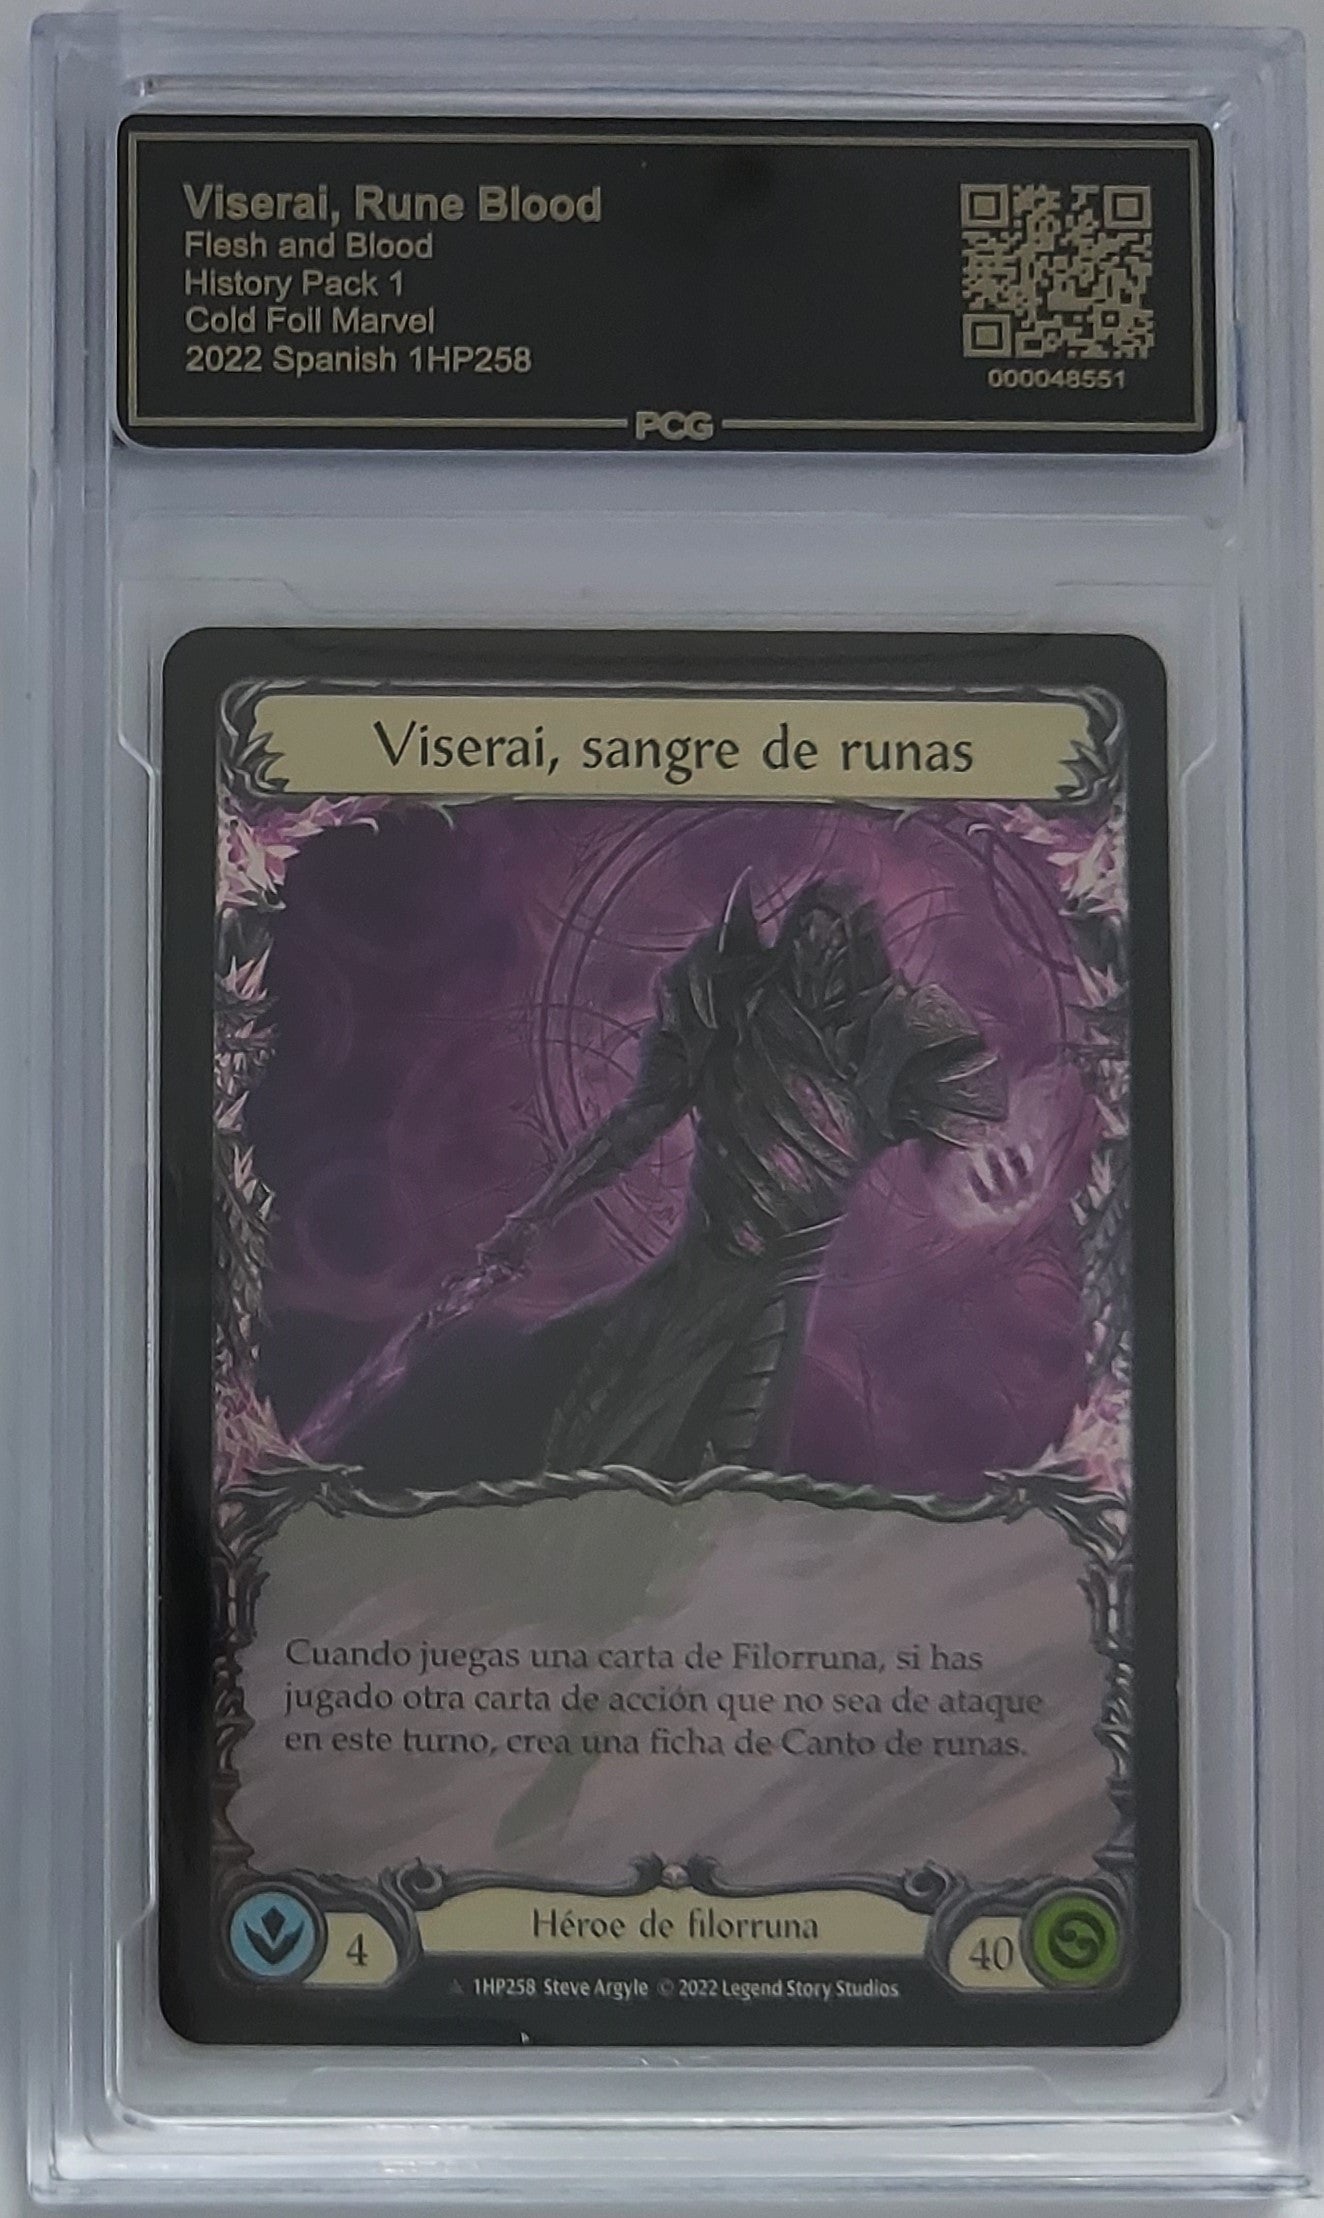 [PCG 9] [Marvel] Viserai, Rune Blood (Spanish) - 1HP258